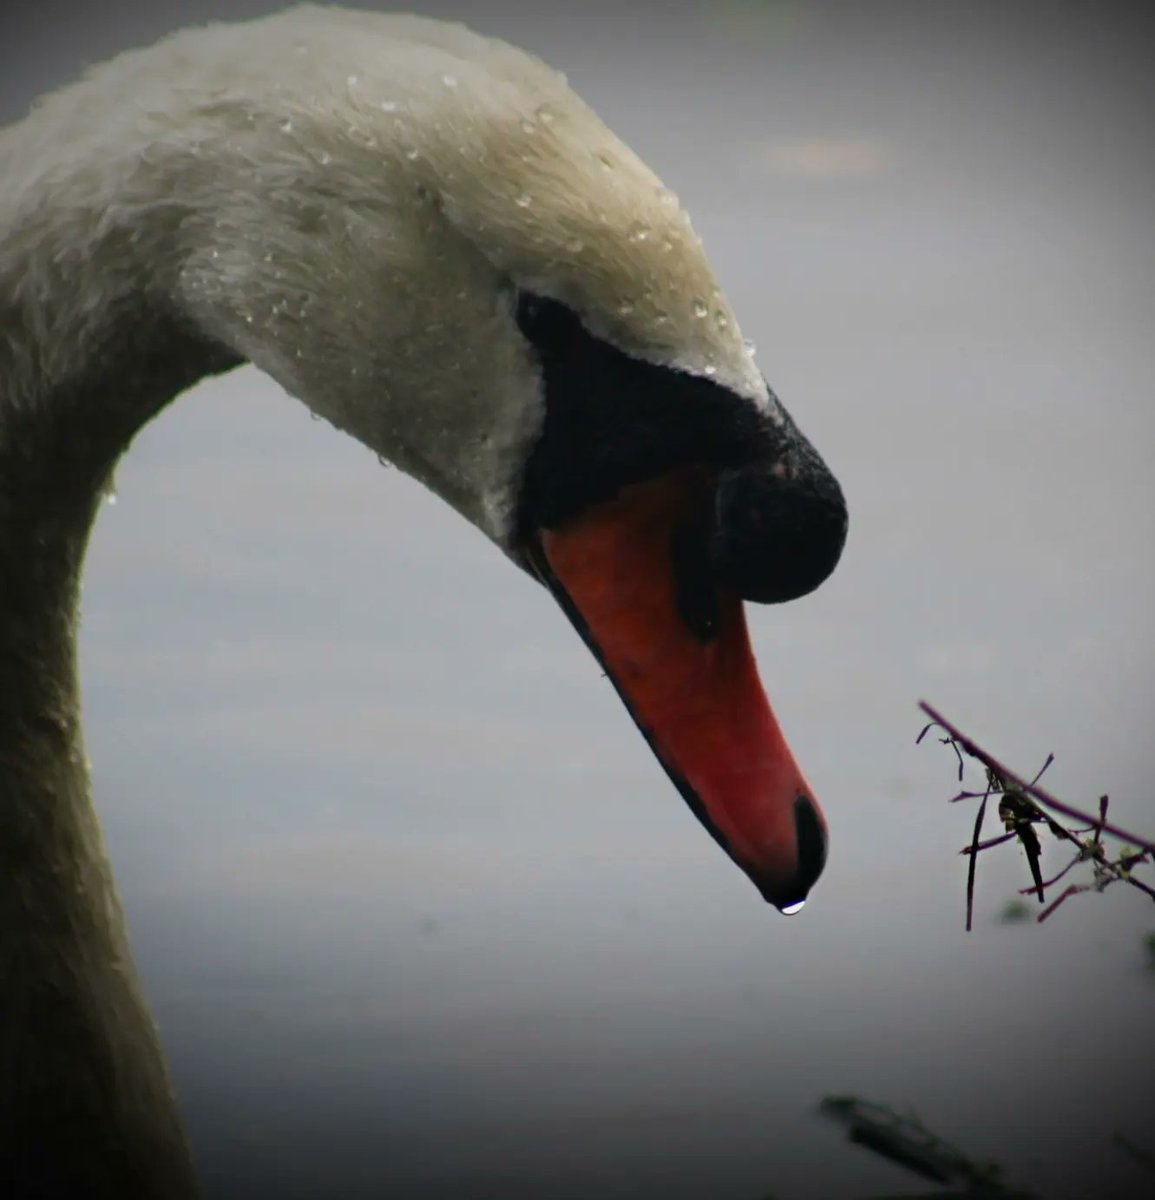 #photography 
#closeupphotography 
#nature 
#Swans 
#birdphotography